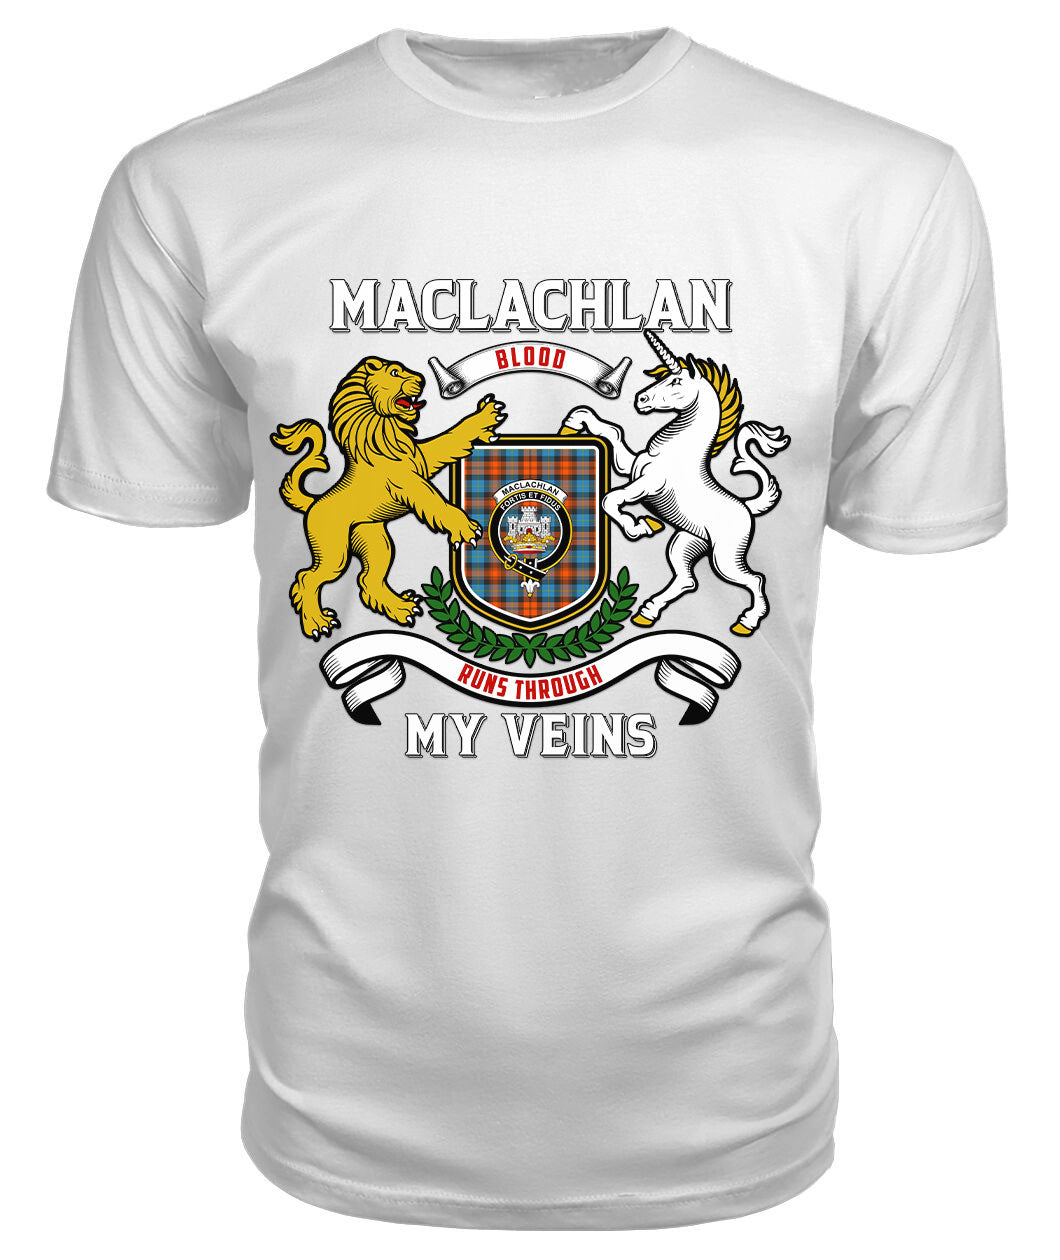 MacLachlan Ancient Tartan Crest 2D T-shirt - Blood Runs Through My Veins Style